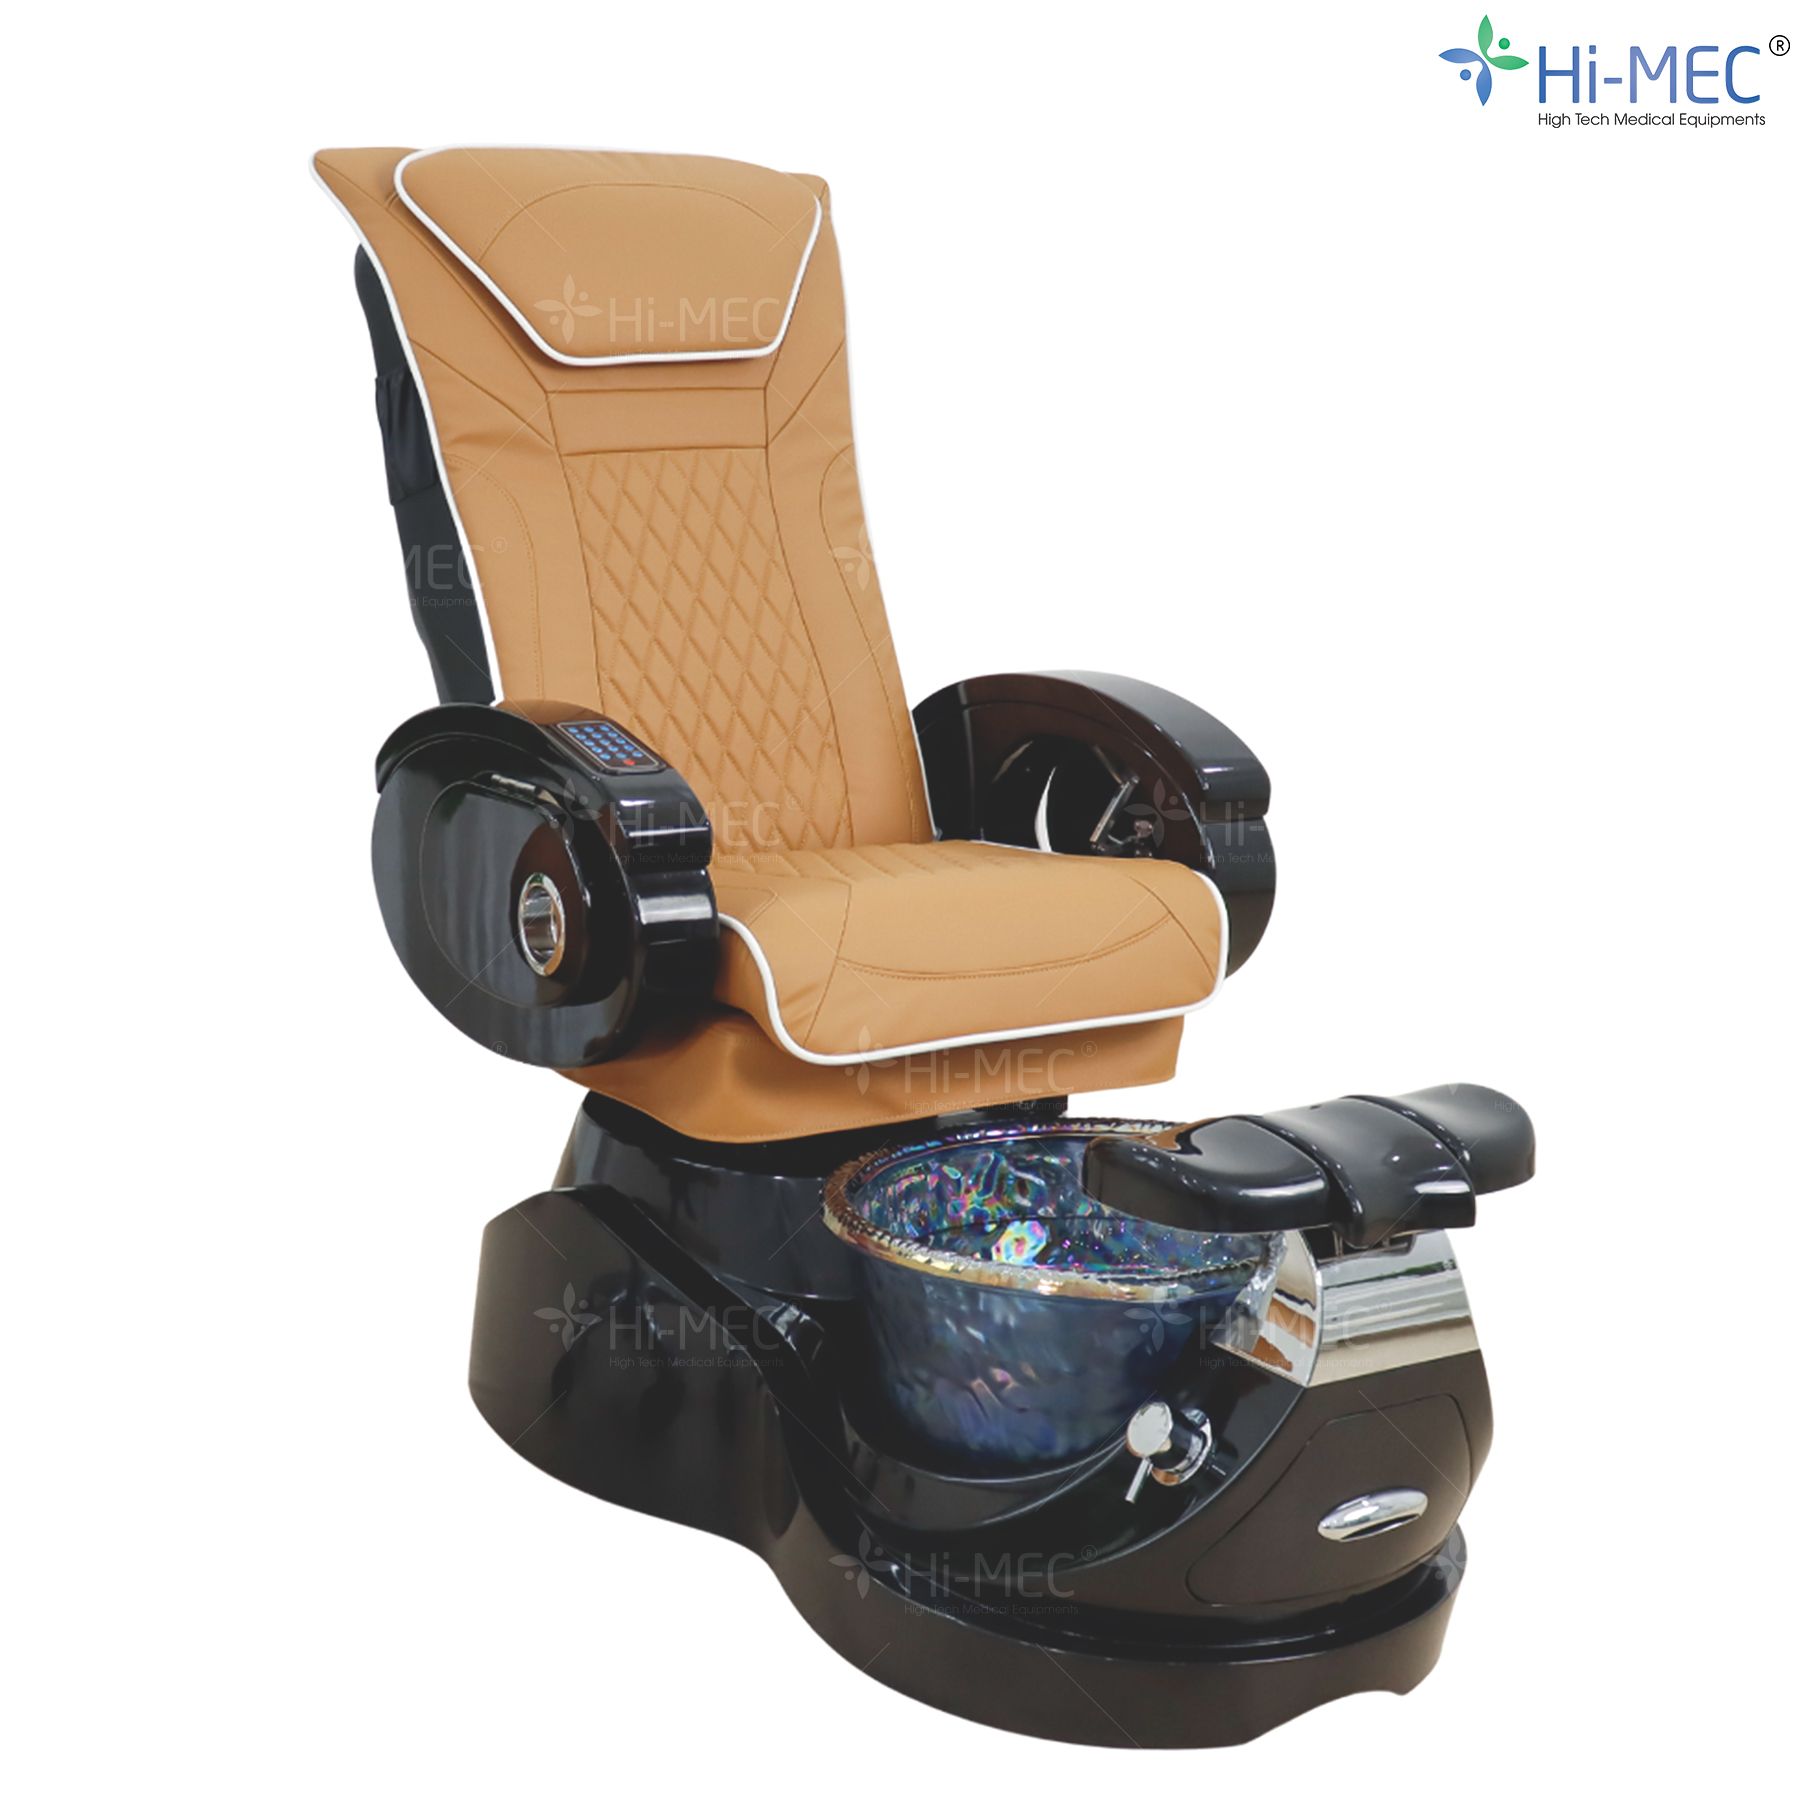  Ghế Nail Pedicure Mechanical Massage HMPC-103 